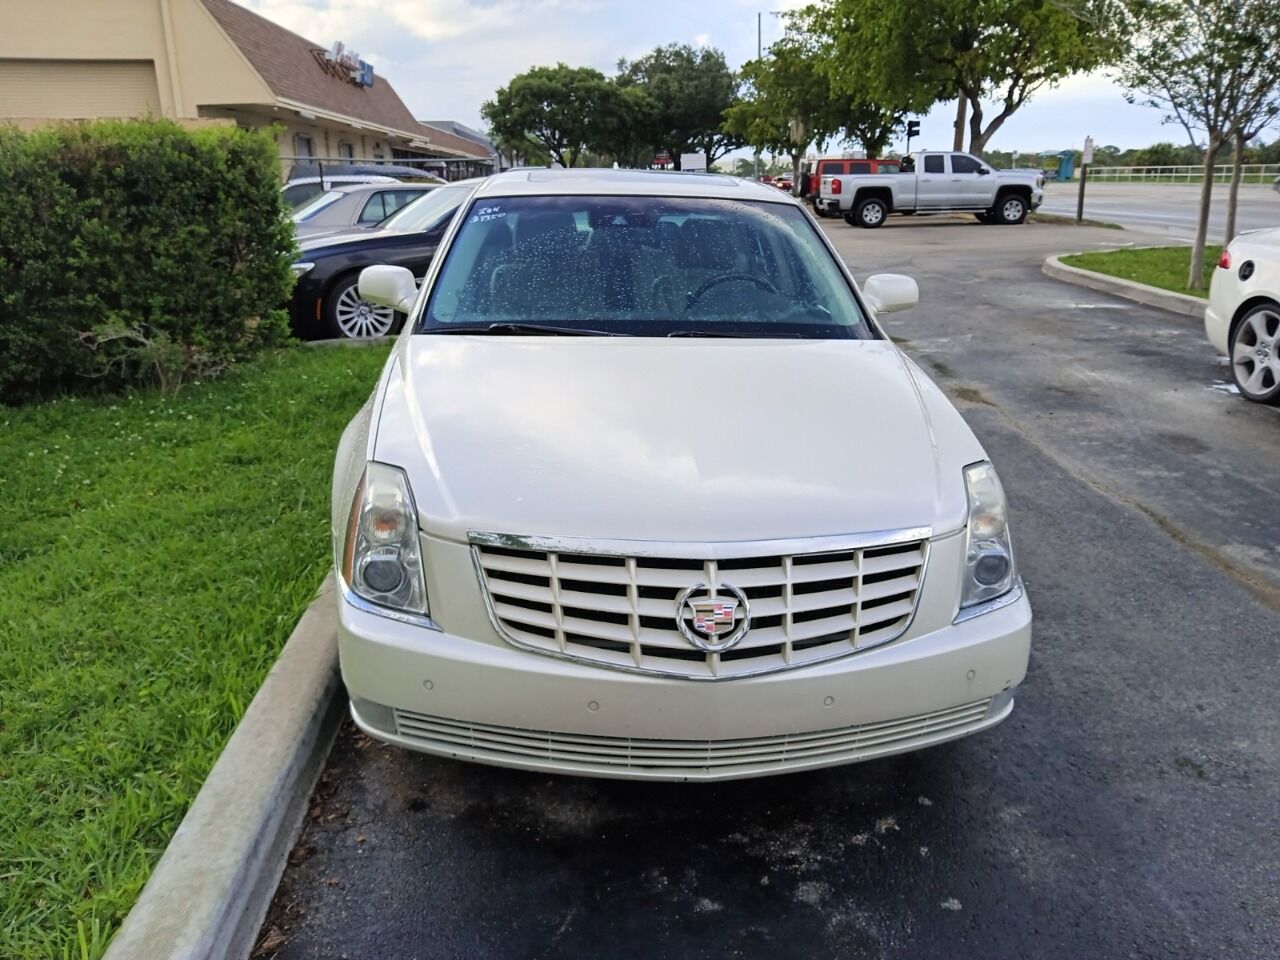 2011 Cadillac DTS Sedan - $7,950